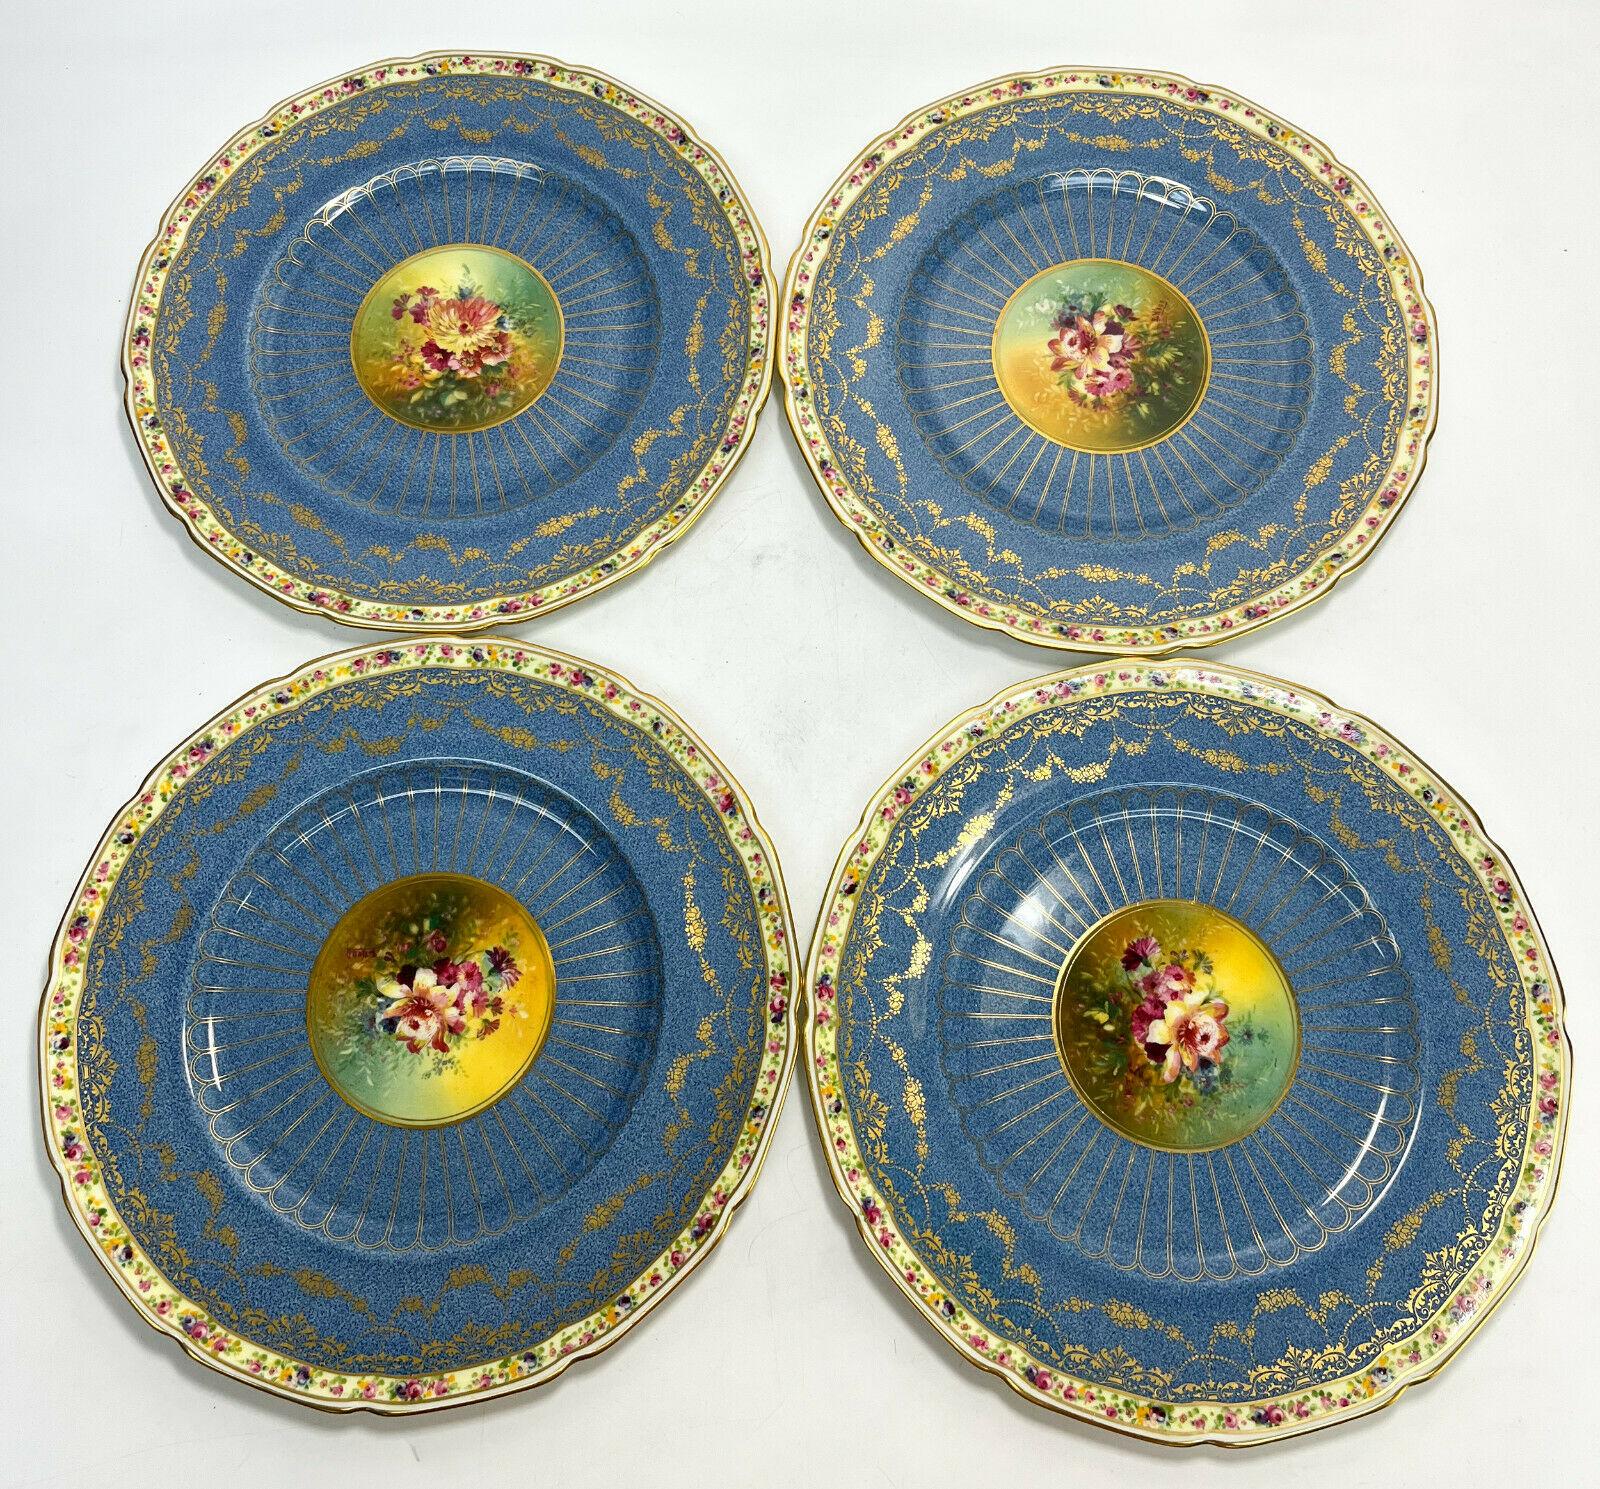 20th Century Set of 12 Royal Doulton England Porcelain Dinner Plates, circa 1910